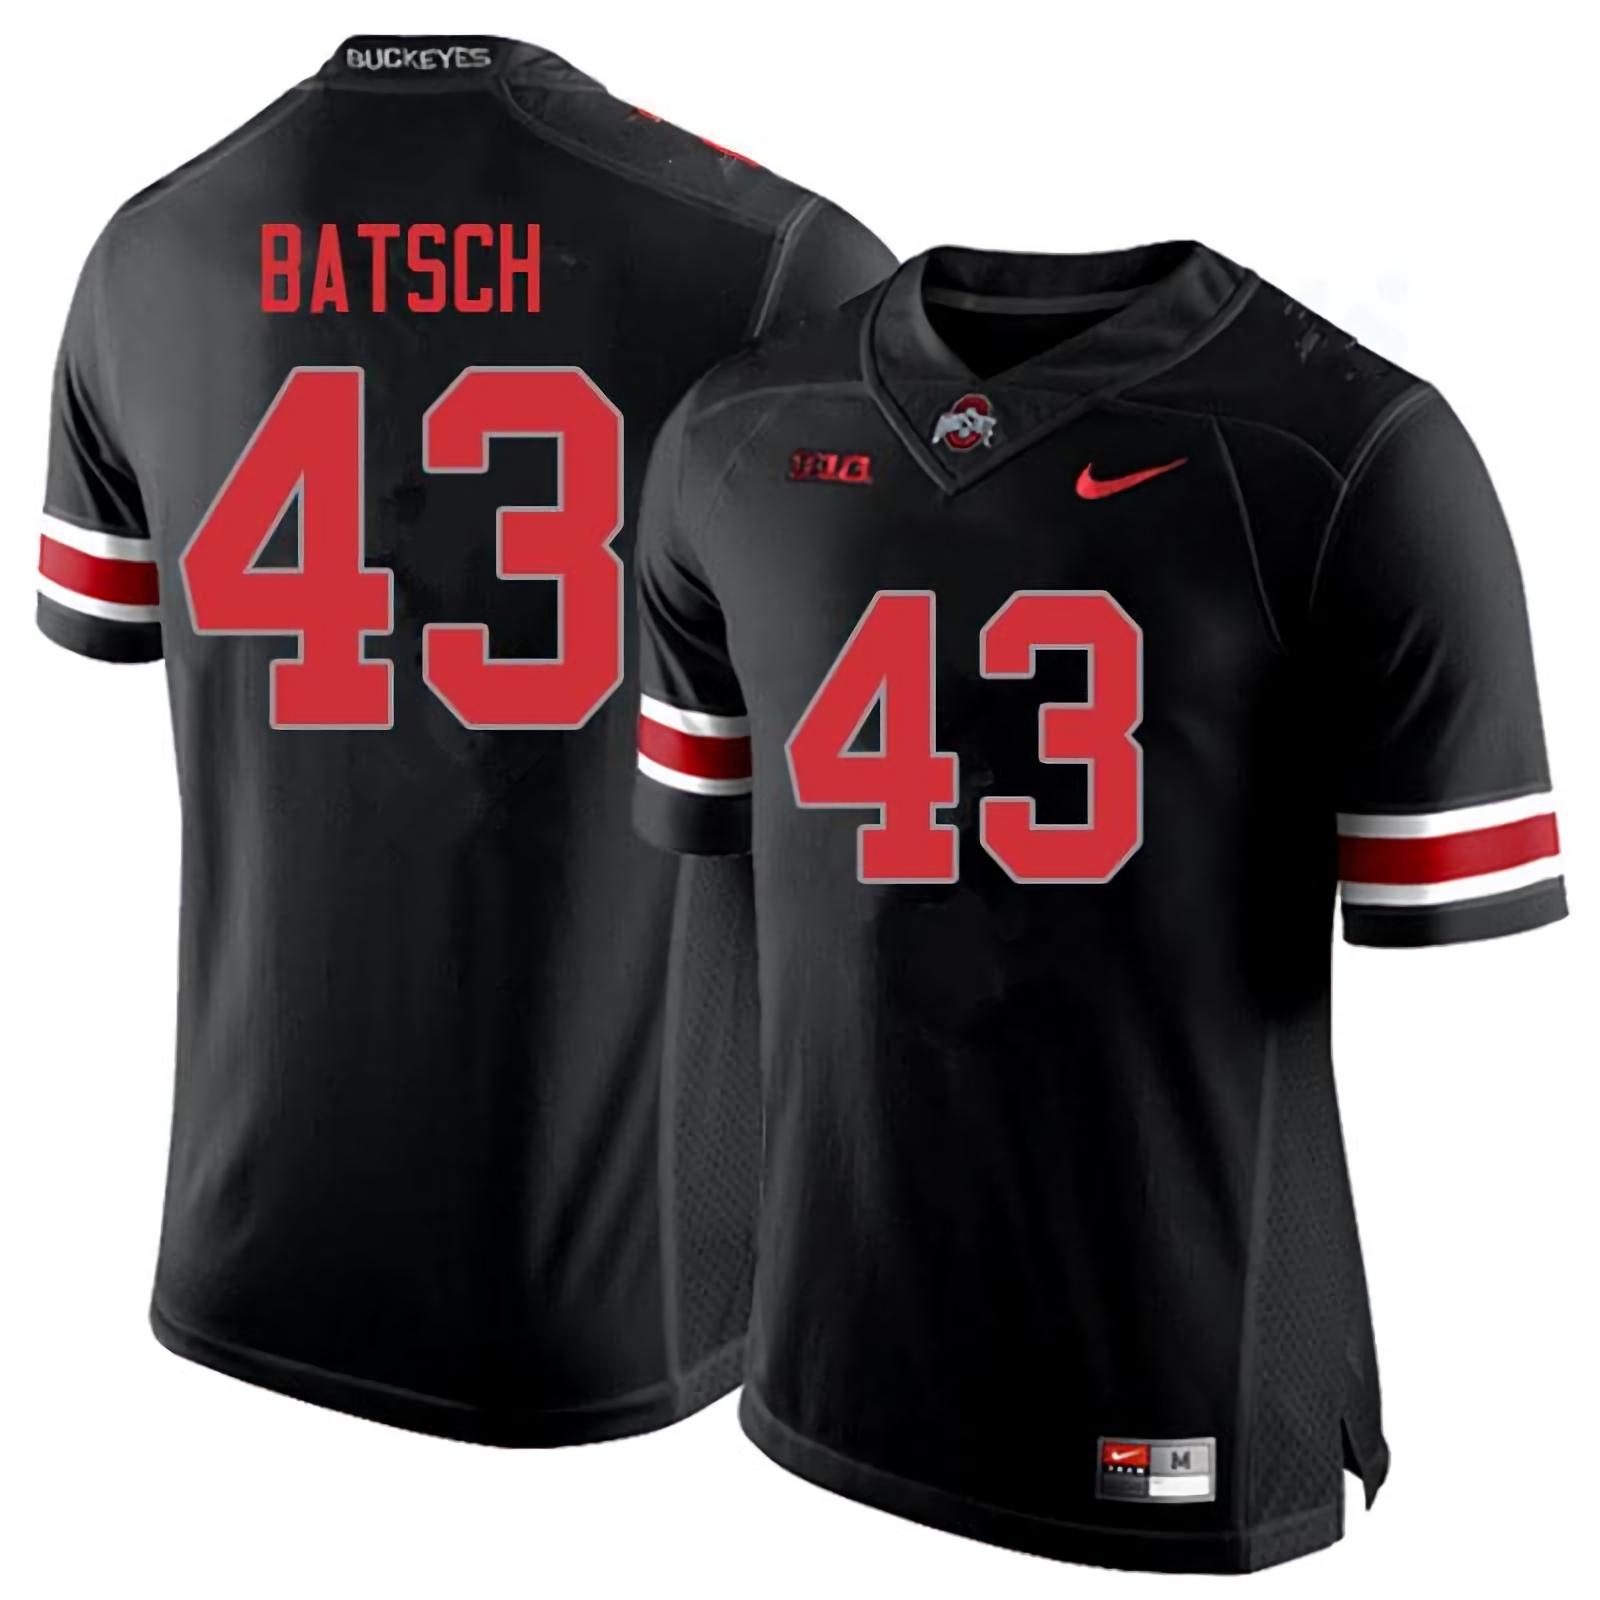 Ryan Batsch Ohio State Buckeyes Men's NCAA #43 Nike Blackout College Stitched Football Jersey TKT7056FJ